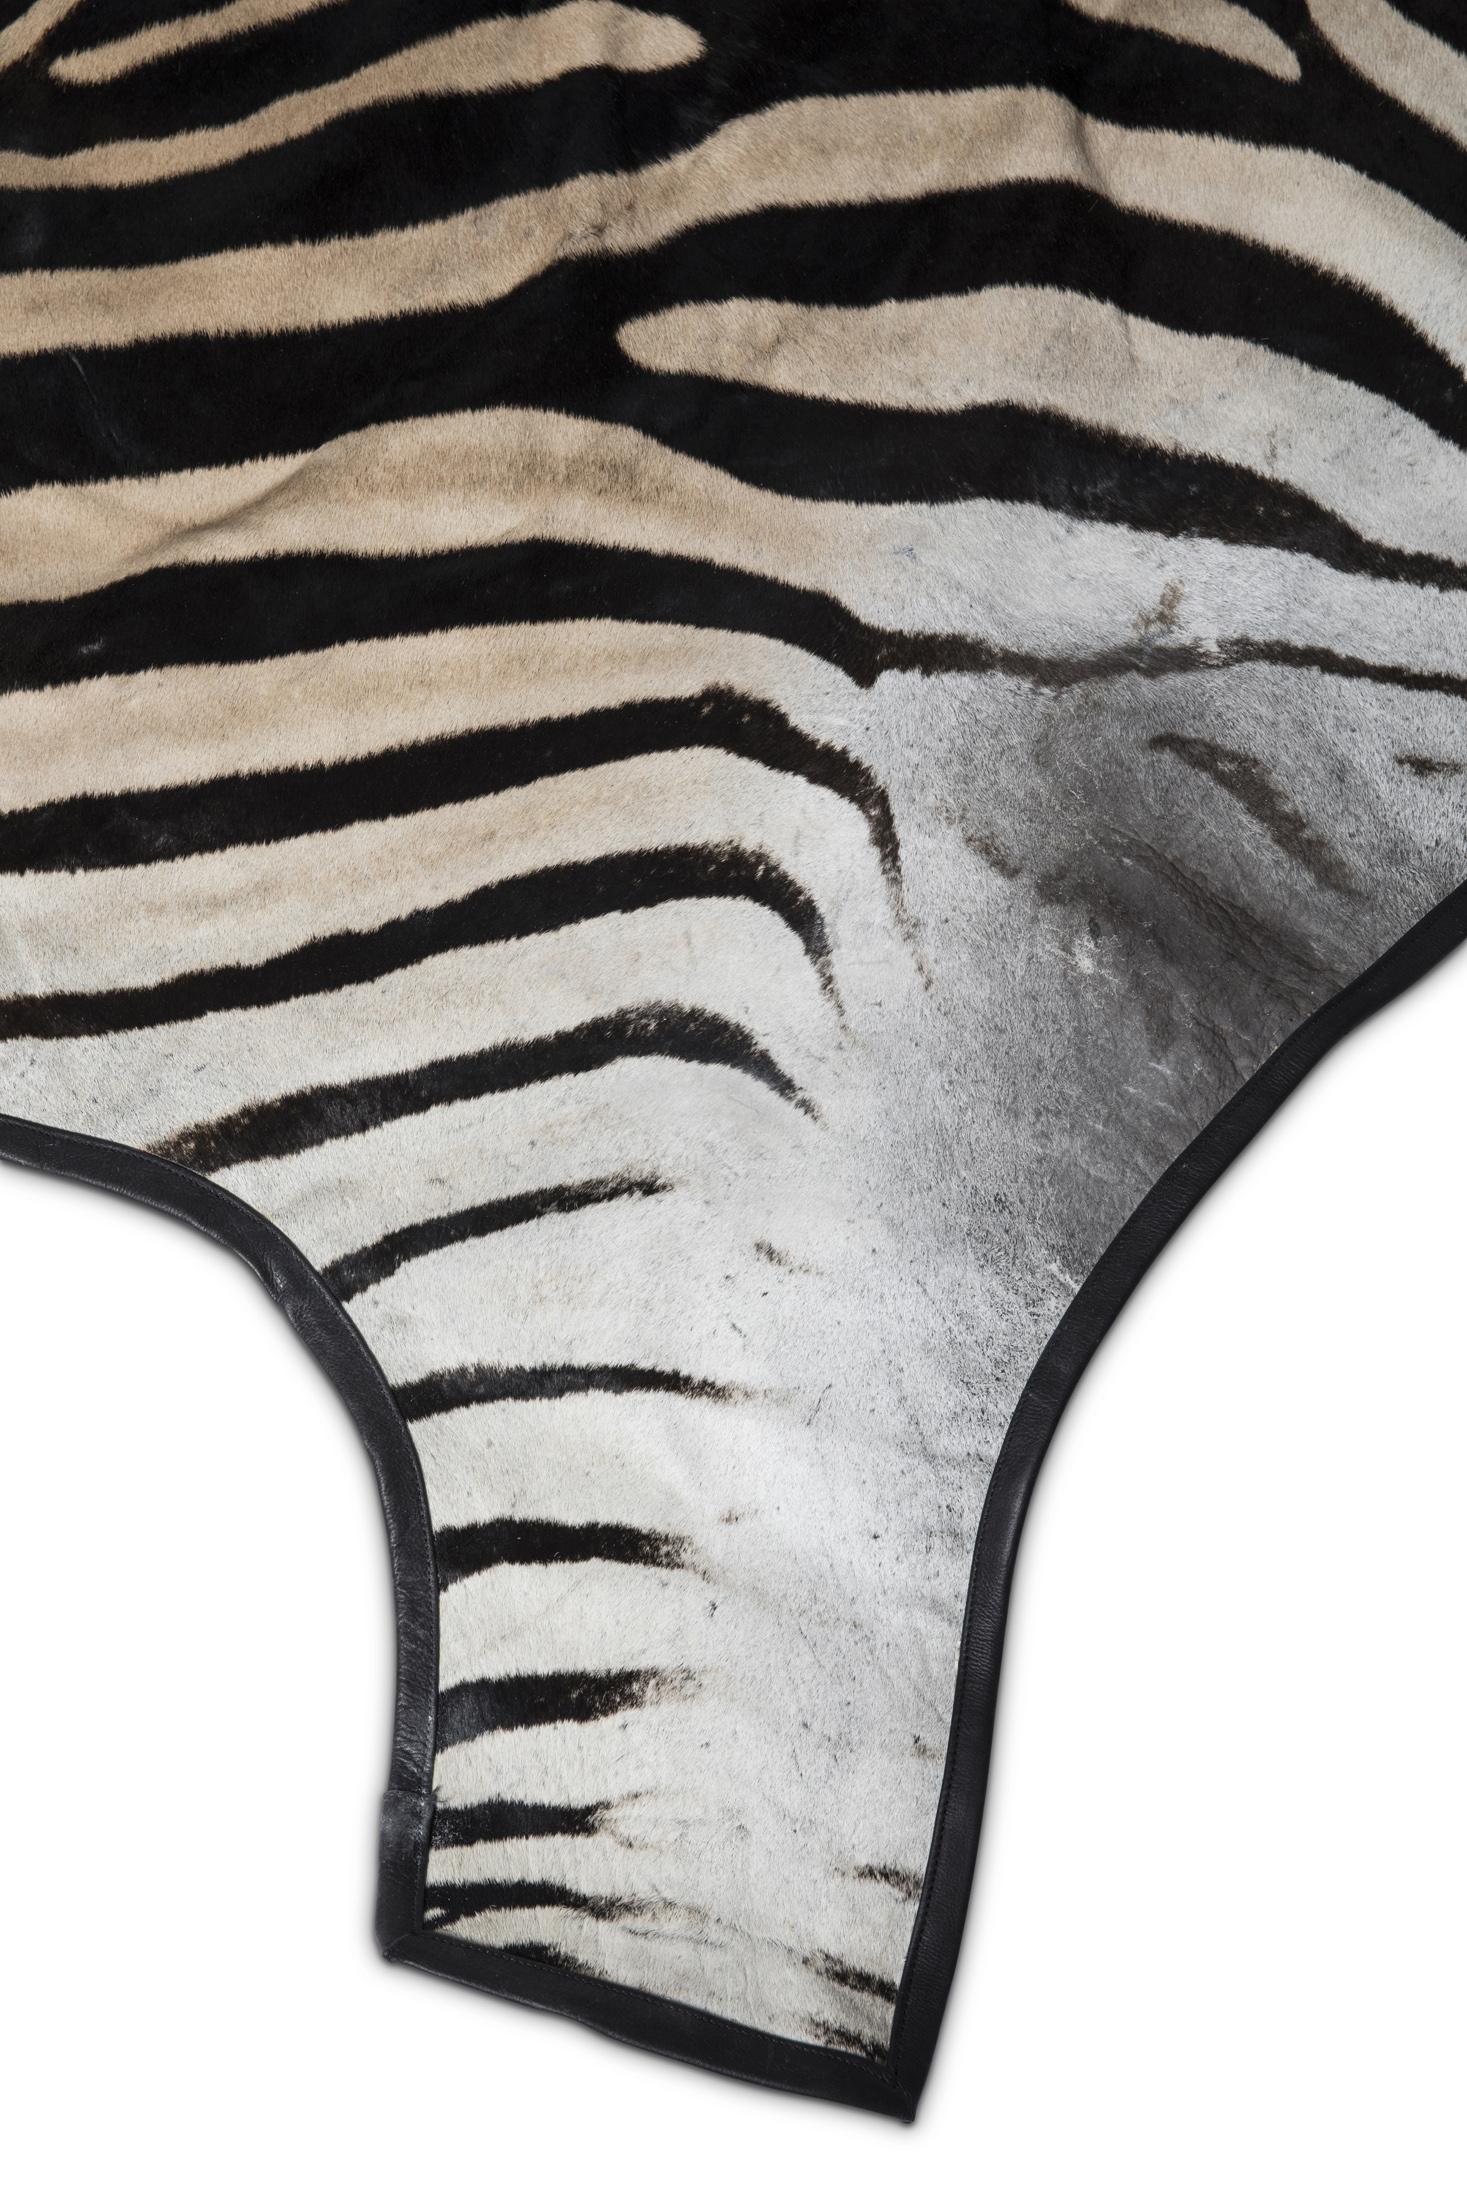 Zebra Hide - Leather Trimmed